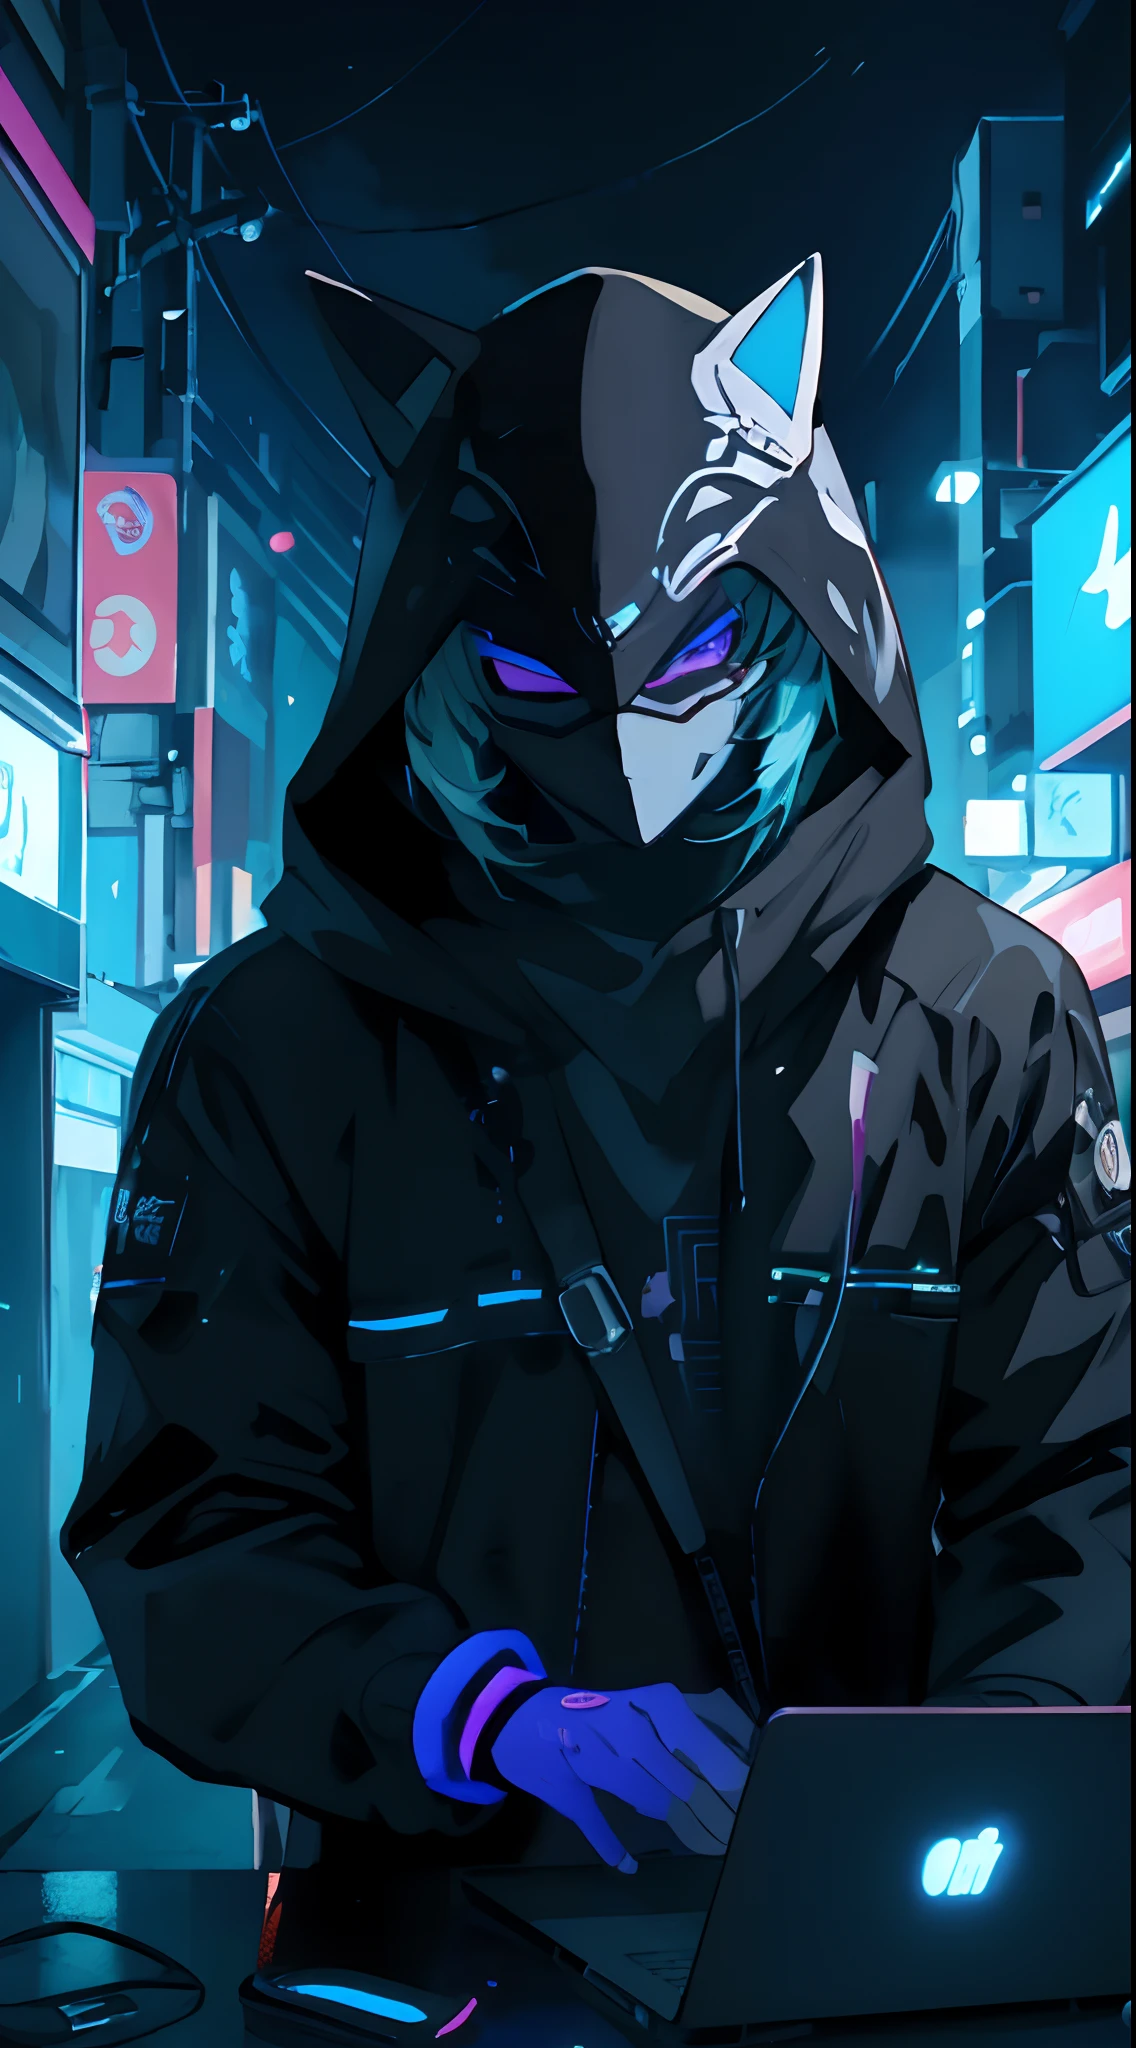 Hollow Ichigo Most Badass Anime Male Character Desktop Background